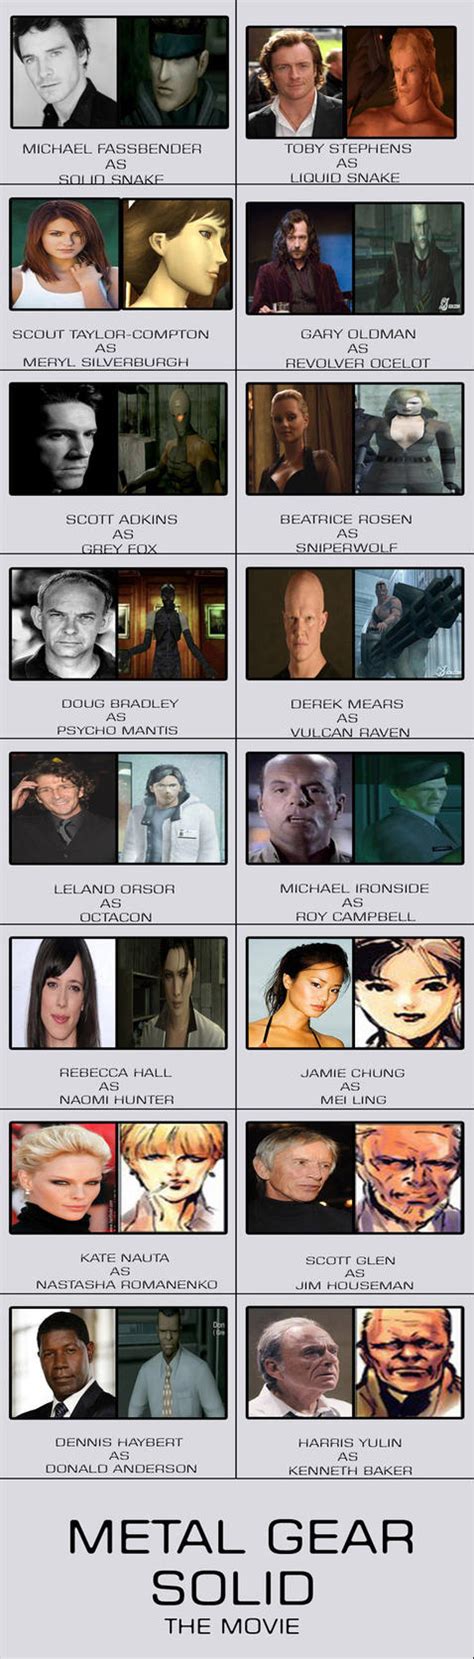 Metal Gear Solid Movie cast by videogamemoviemaster on DeviantArt